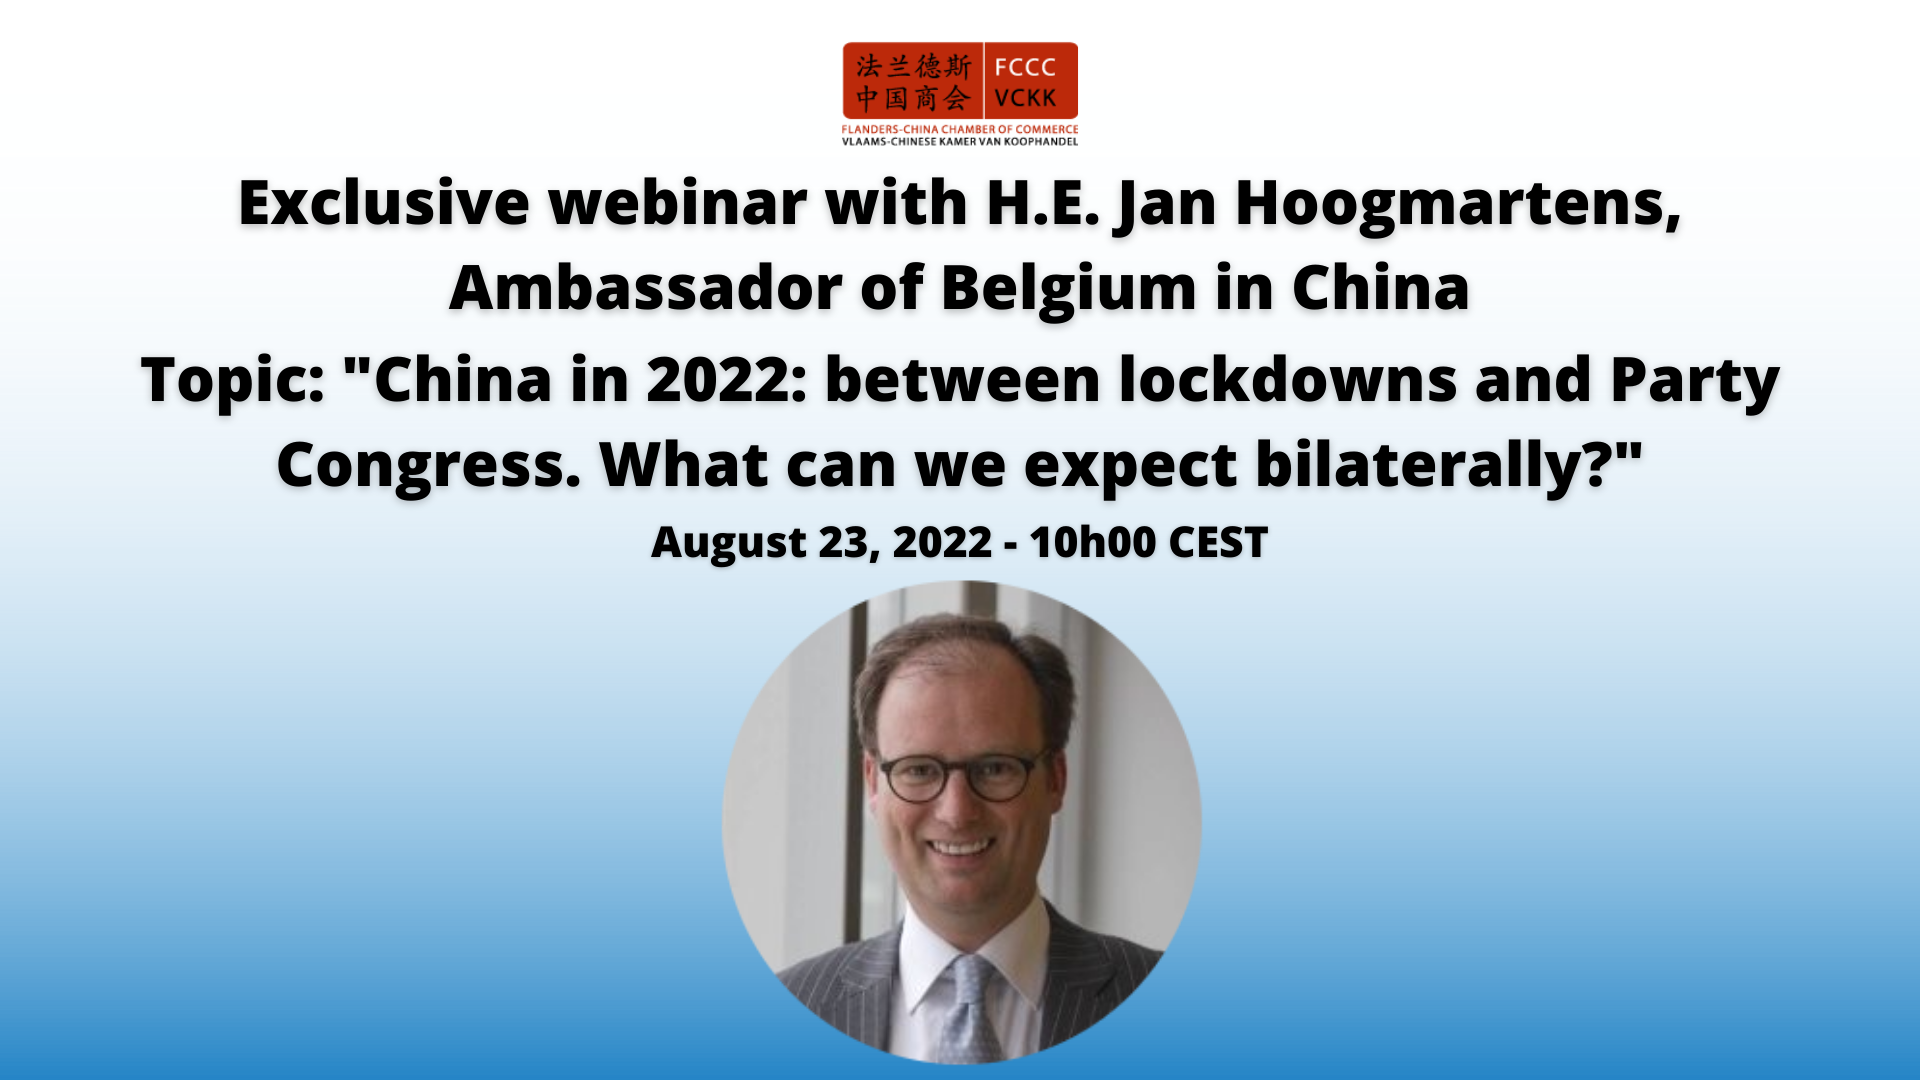 Exclusive webinar with H.E. Jan Hoogmartens, Ambassador of Belgium in China - August 23, 2022 - 10h00 CEST